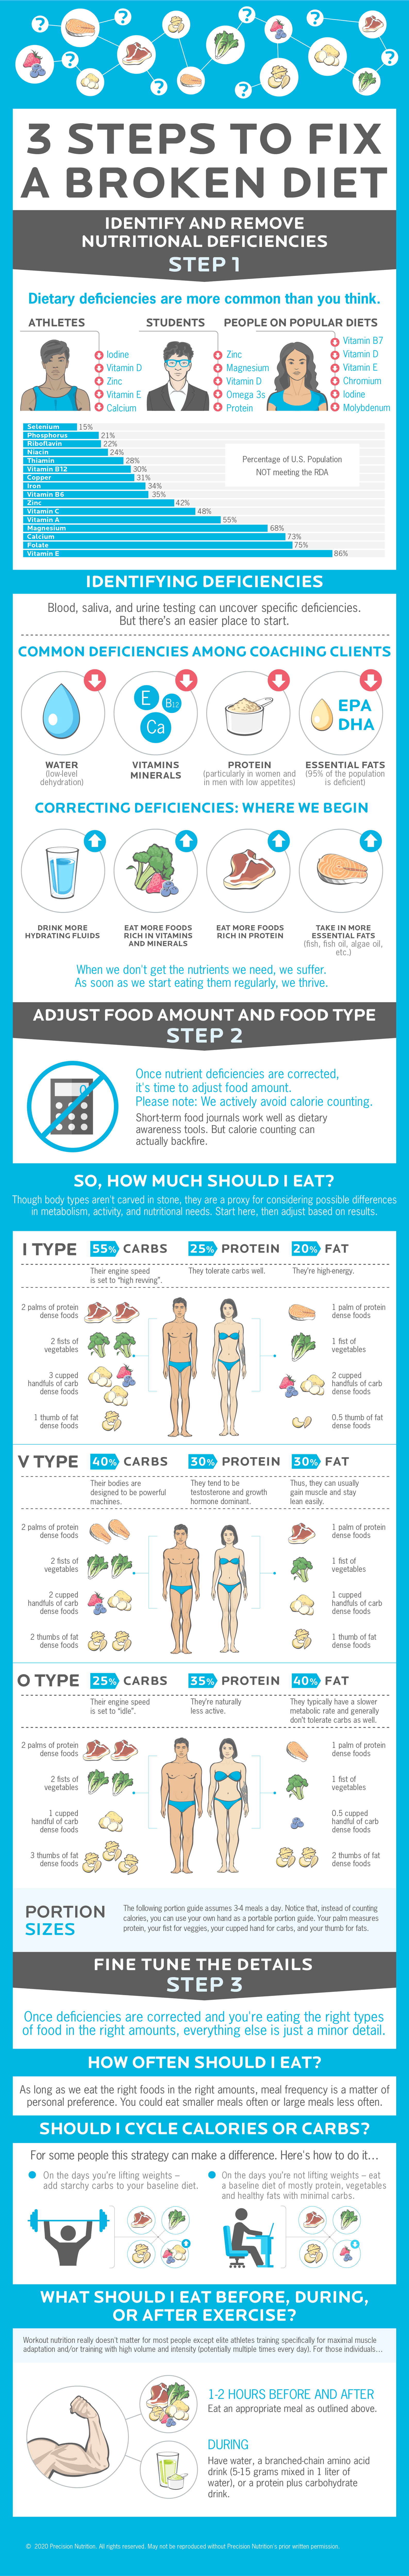 https://assets.precisionnutrition.com/2019/02/how-to-fix-a-broken-diet-infographic-image-3.png